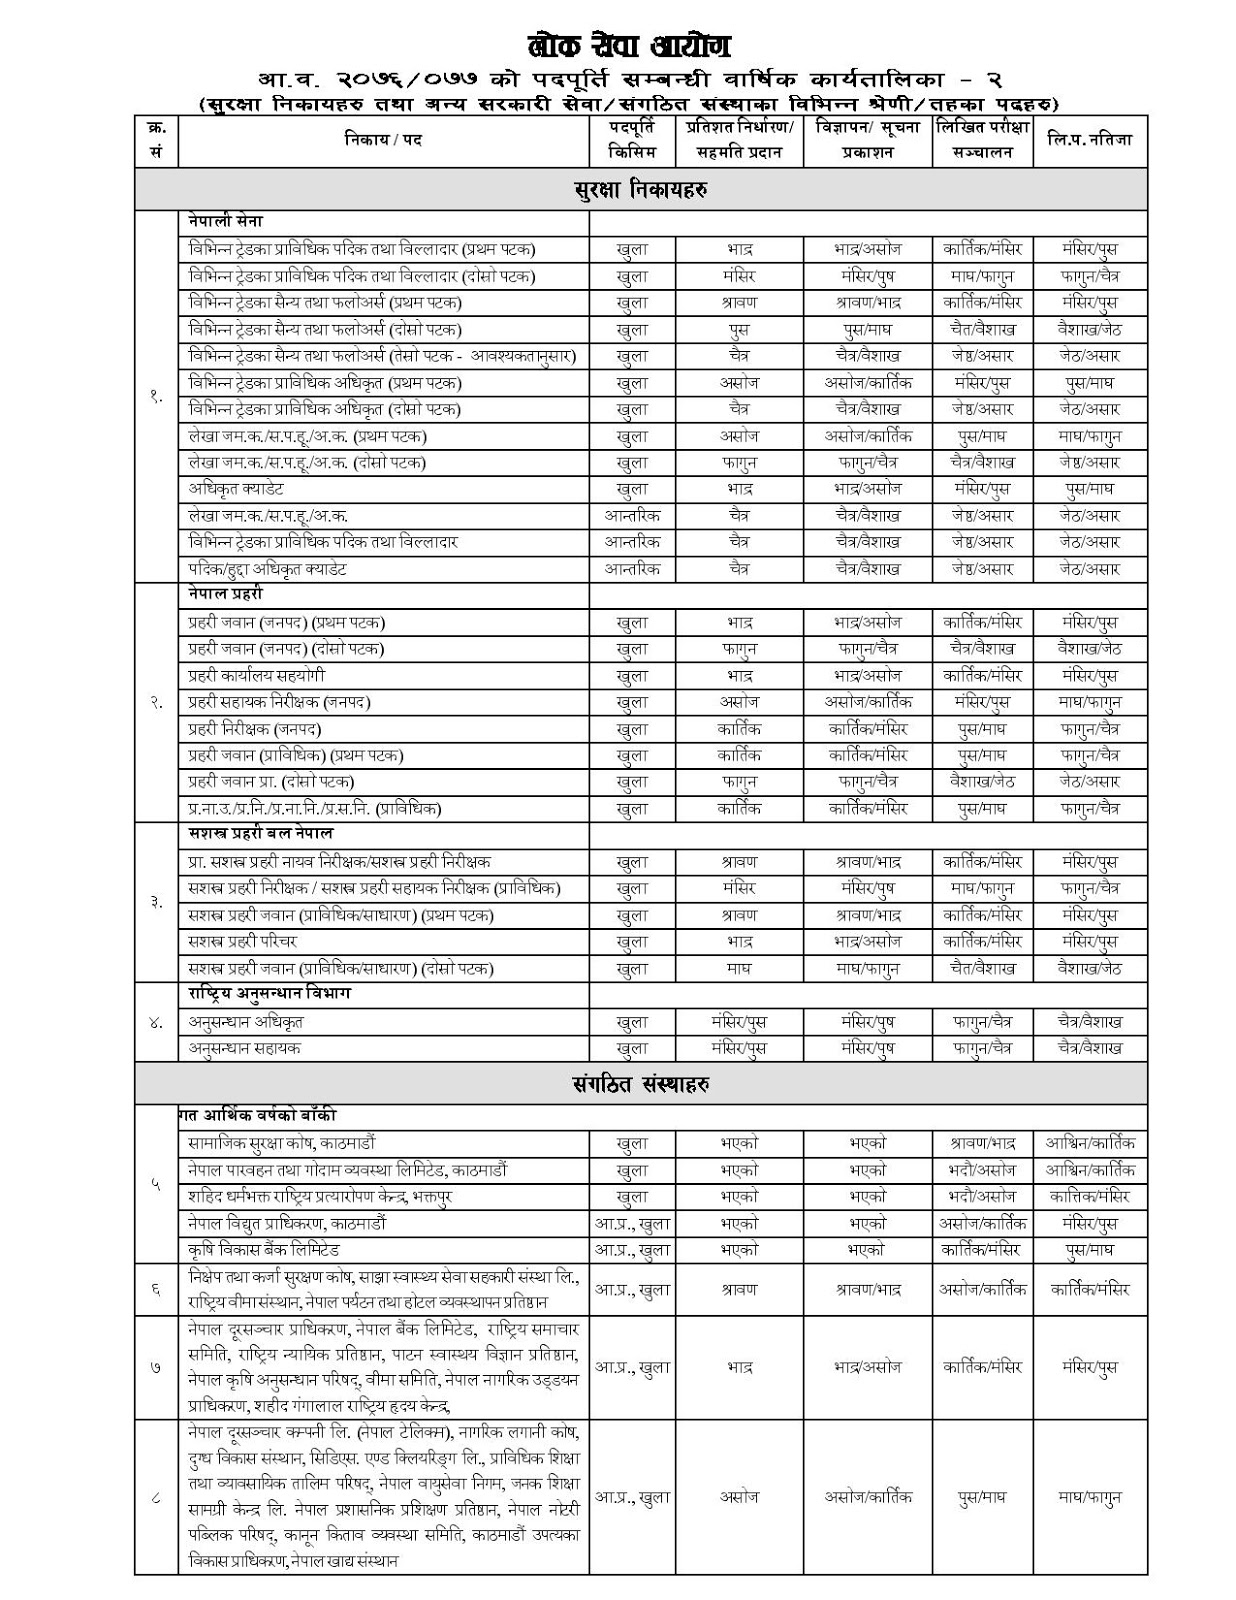  Lok Sewa Aayog New Annual Schedule Fiscal Year 066/067 offor Sangh and Sthaniya 